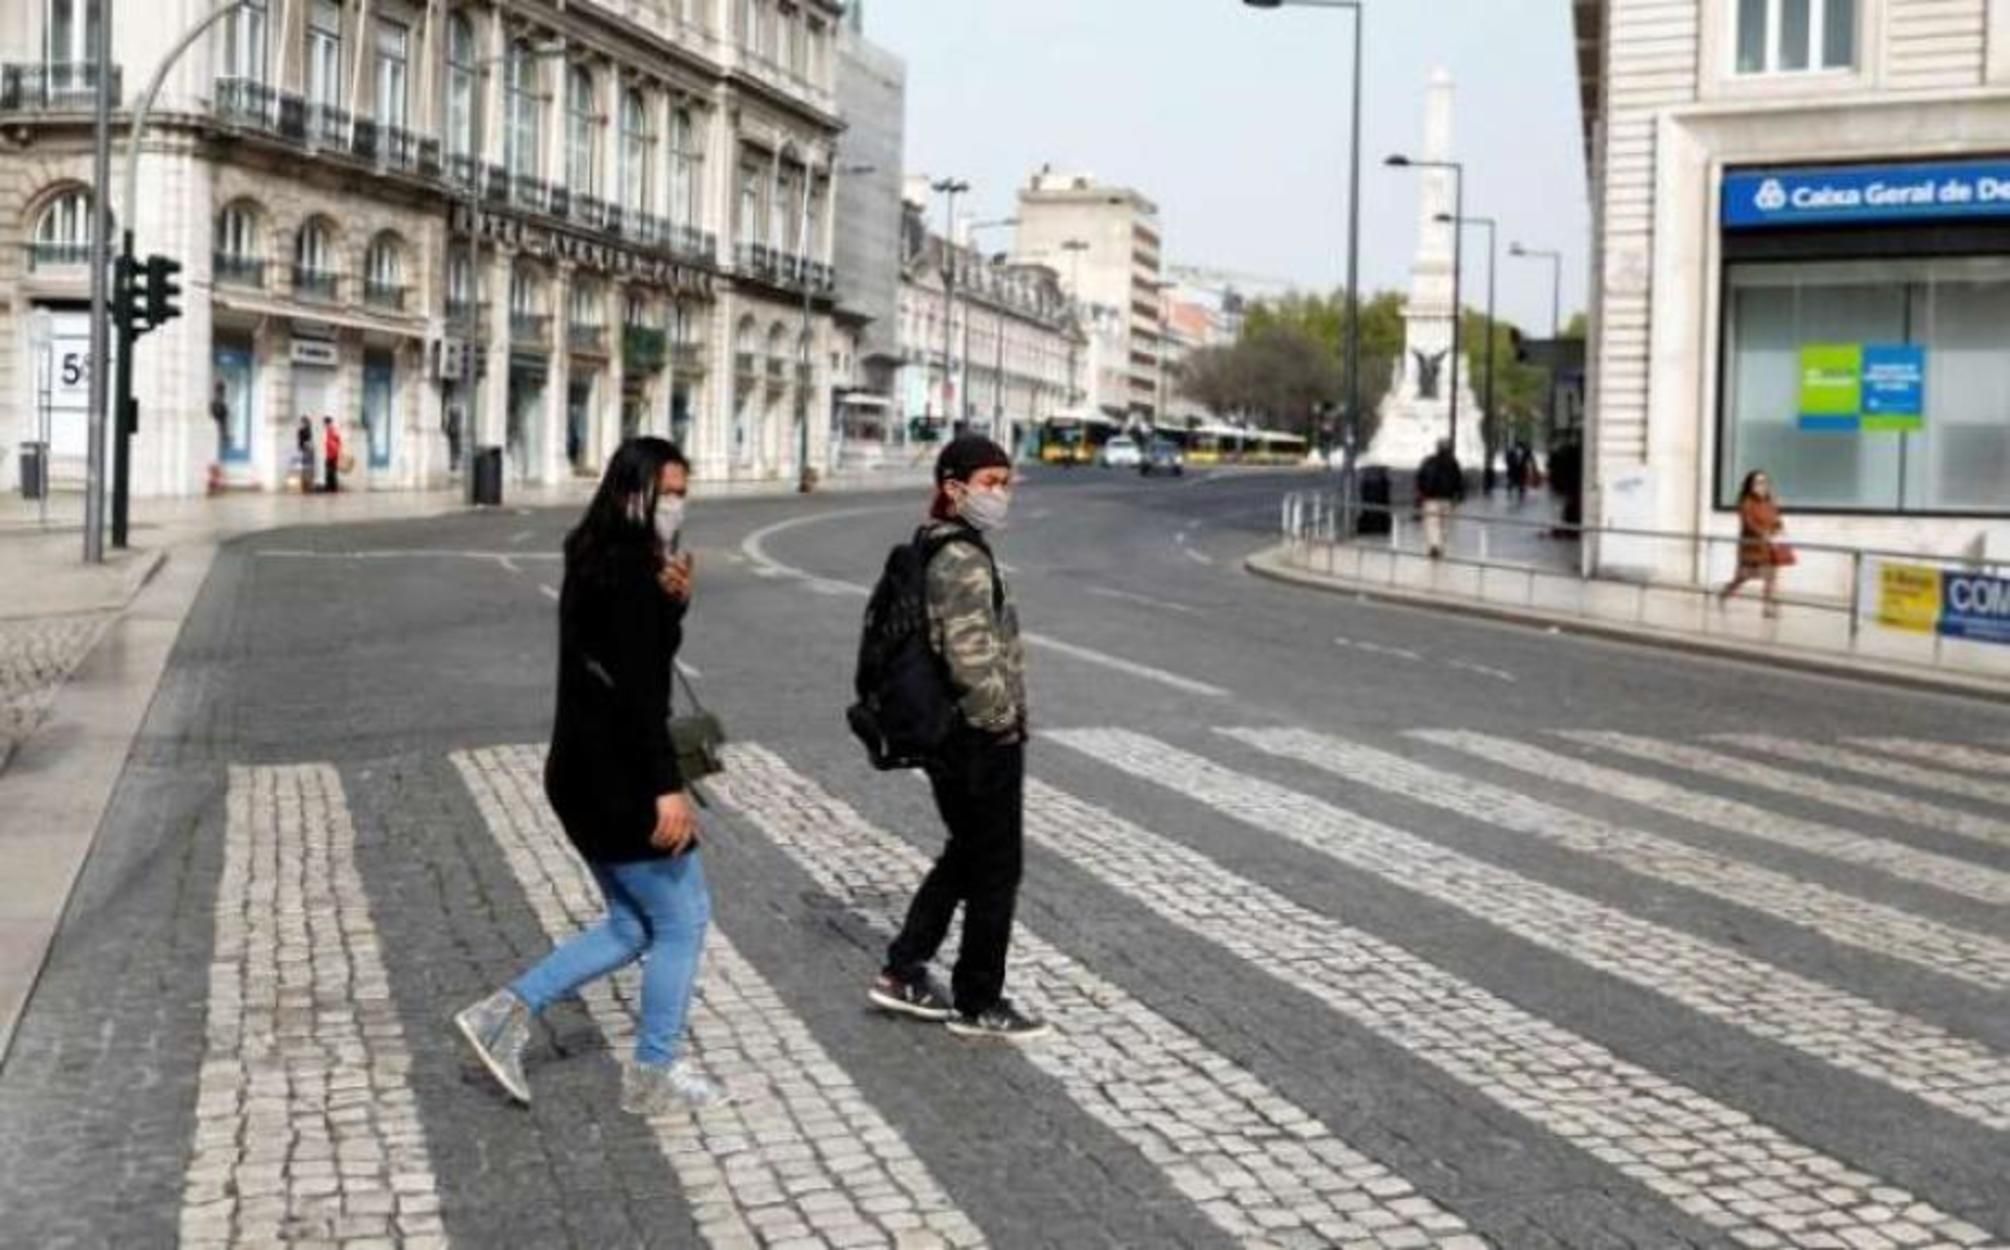 Португалия ослабляет карантин с 4 мая 2020 - детали